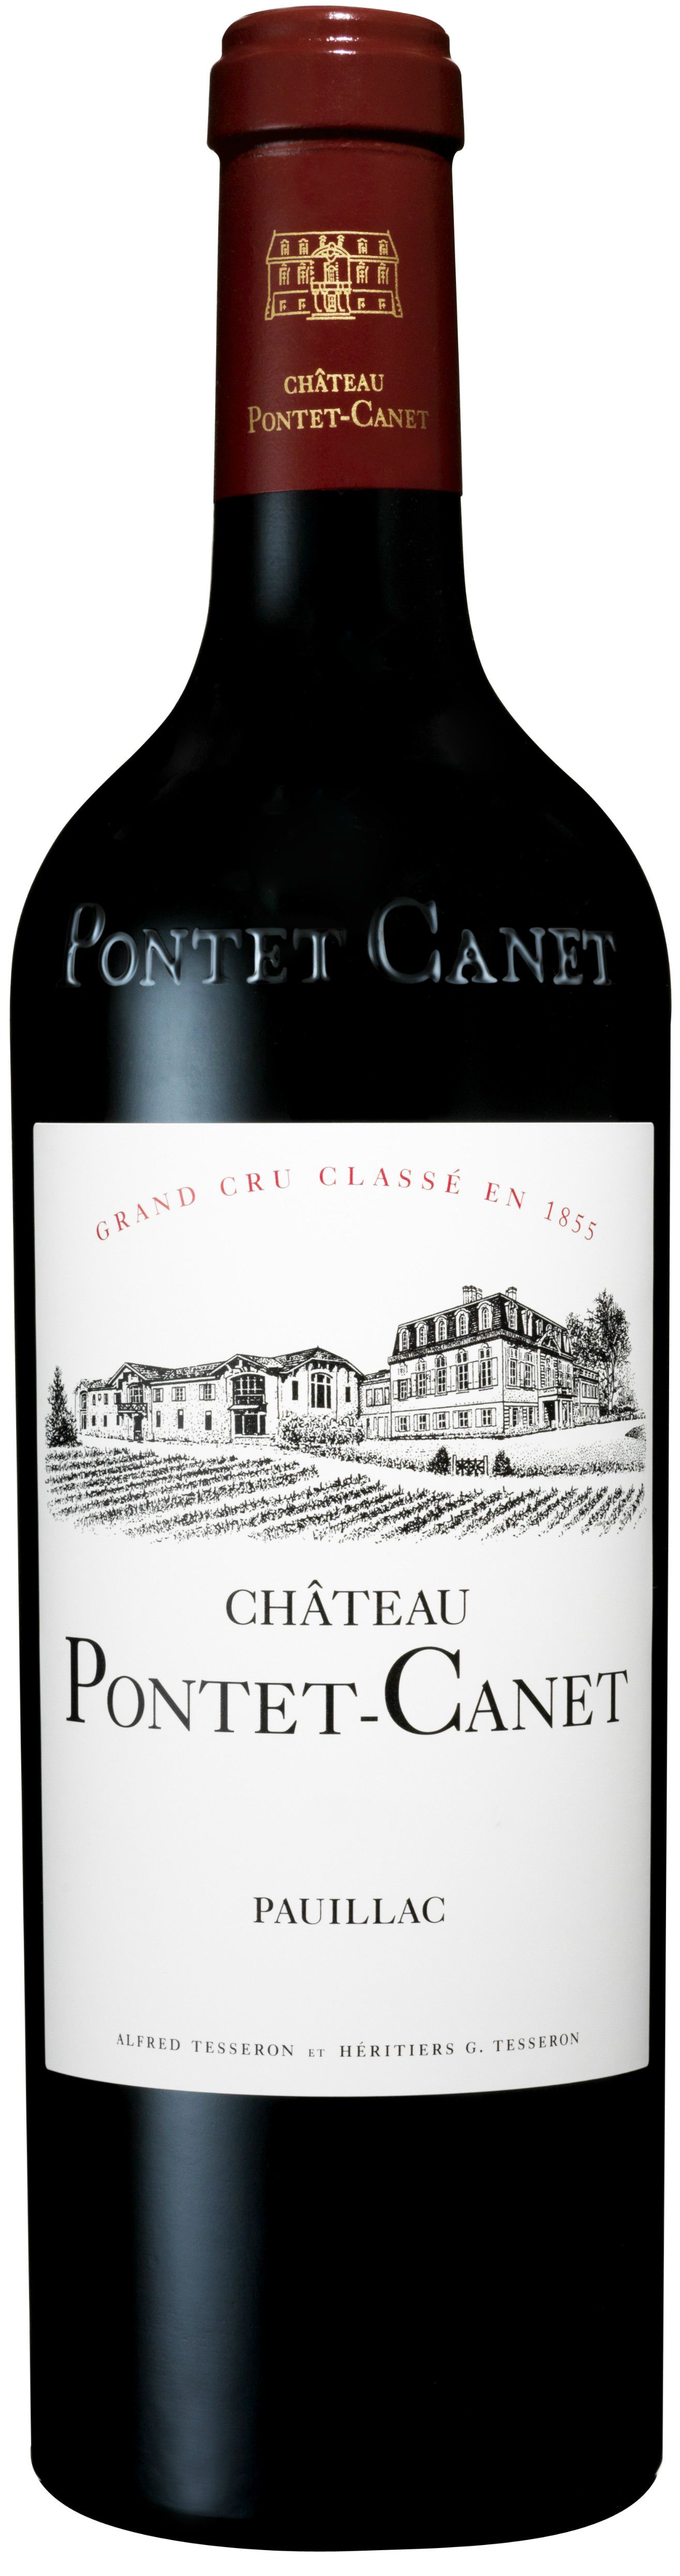 Chateau Pontet-Canet, 2010 (In 6-btls Box Set)